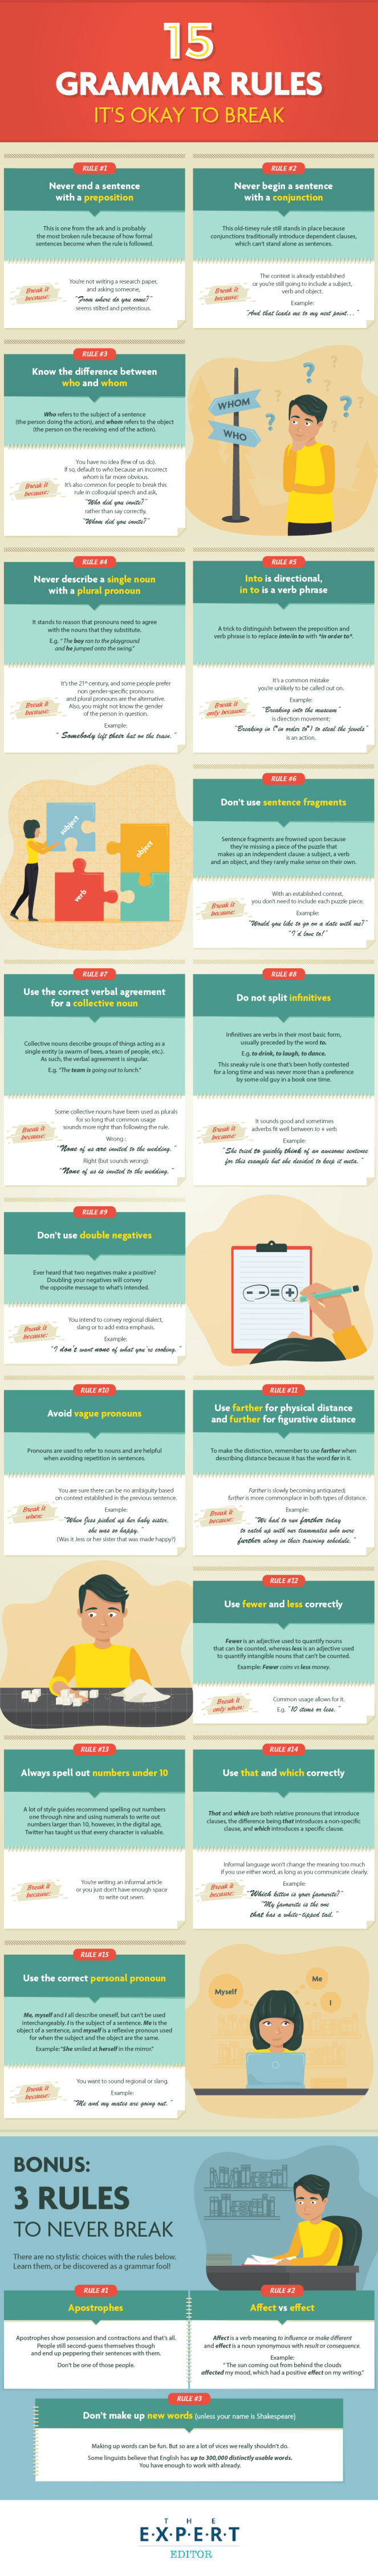 15-Grammar-Rules-It’s-Okay-to-Break-infographic